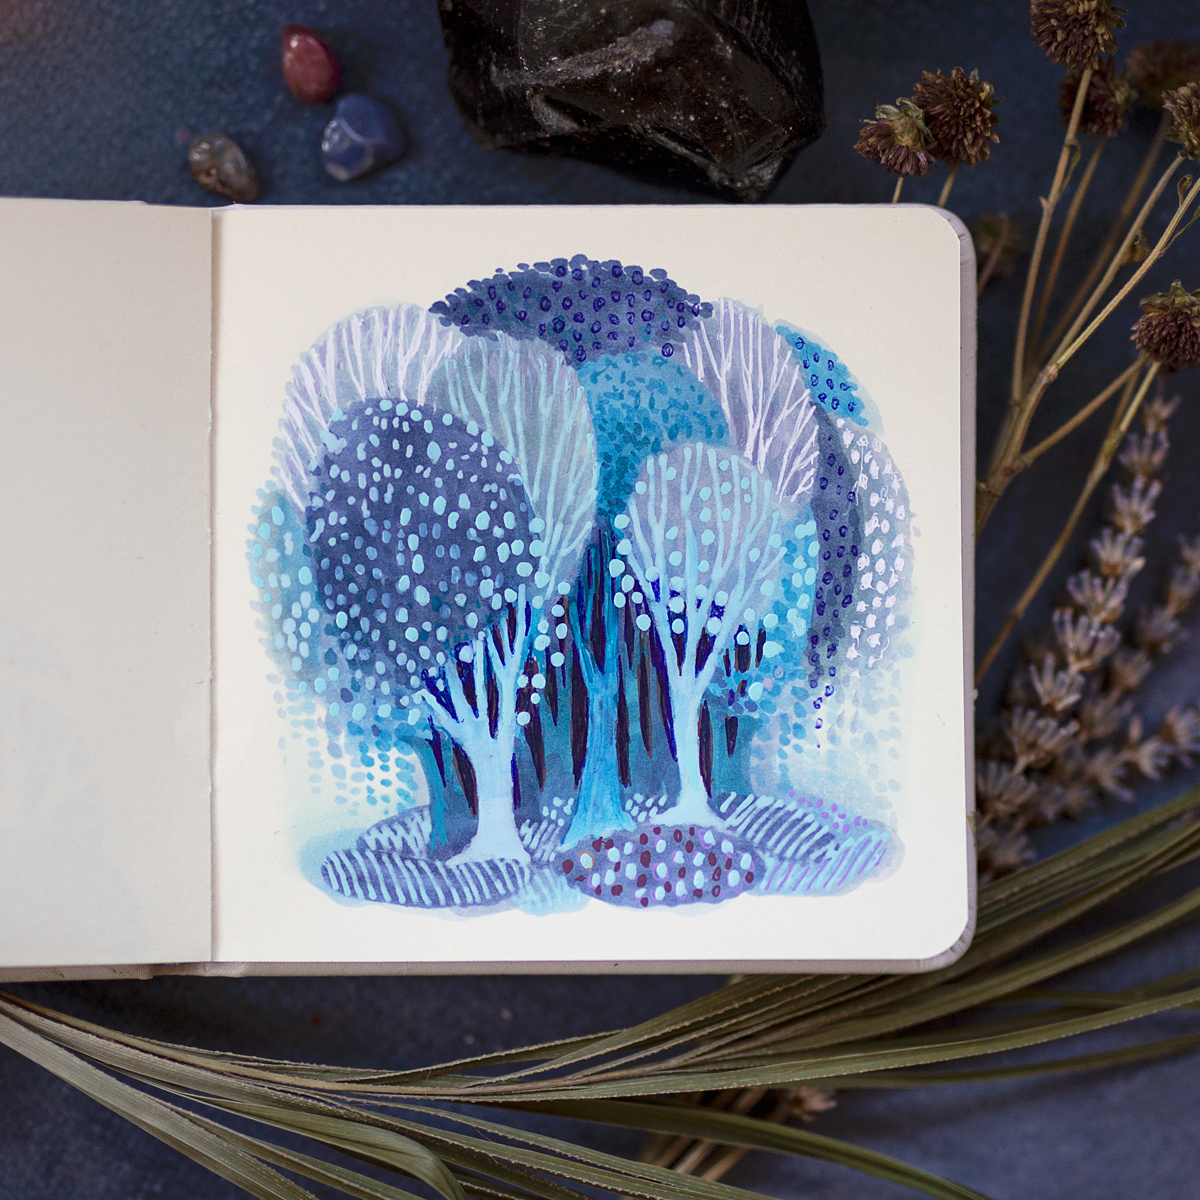 Royal Talens Art Creation Sketchbook - Forest Green